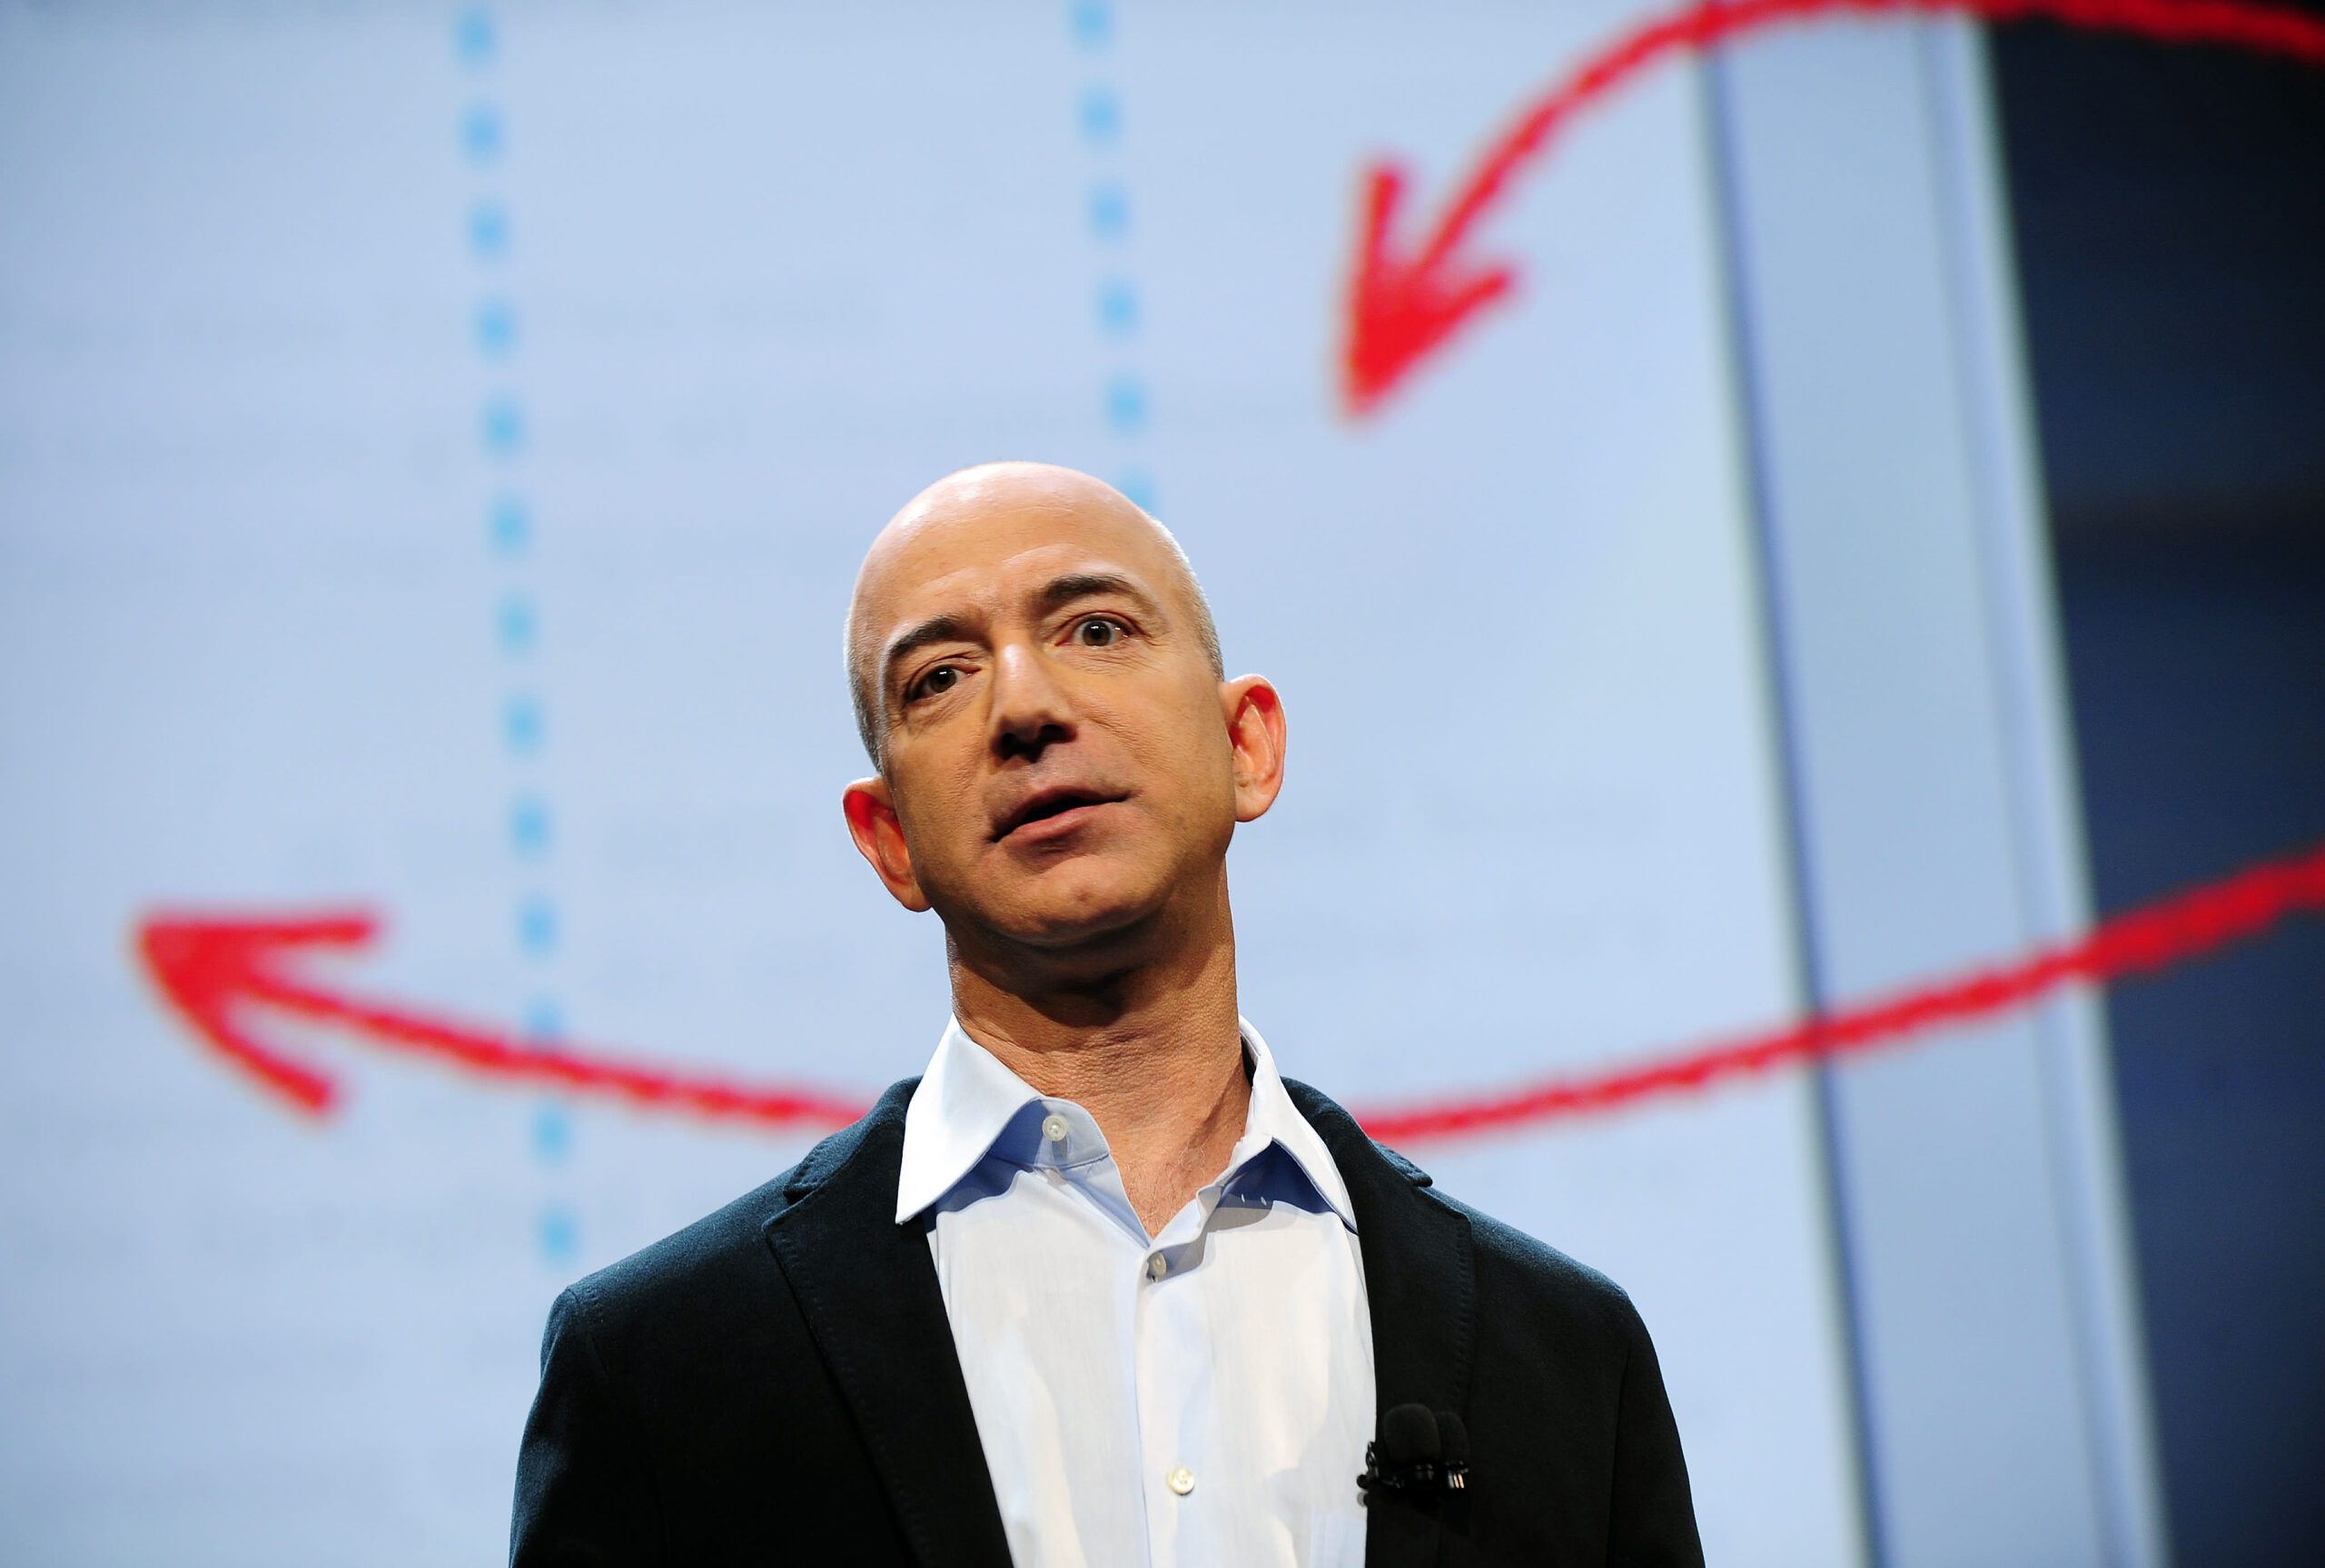 Senators ask Jeff Bezos to crack down on unsafe products on Amazon